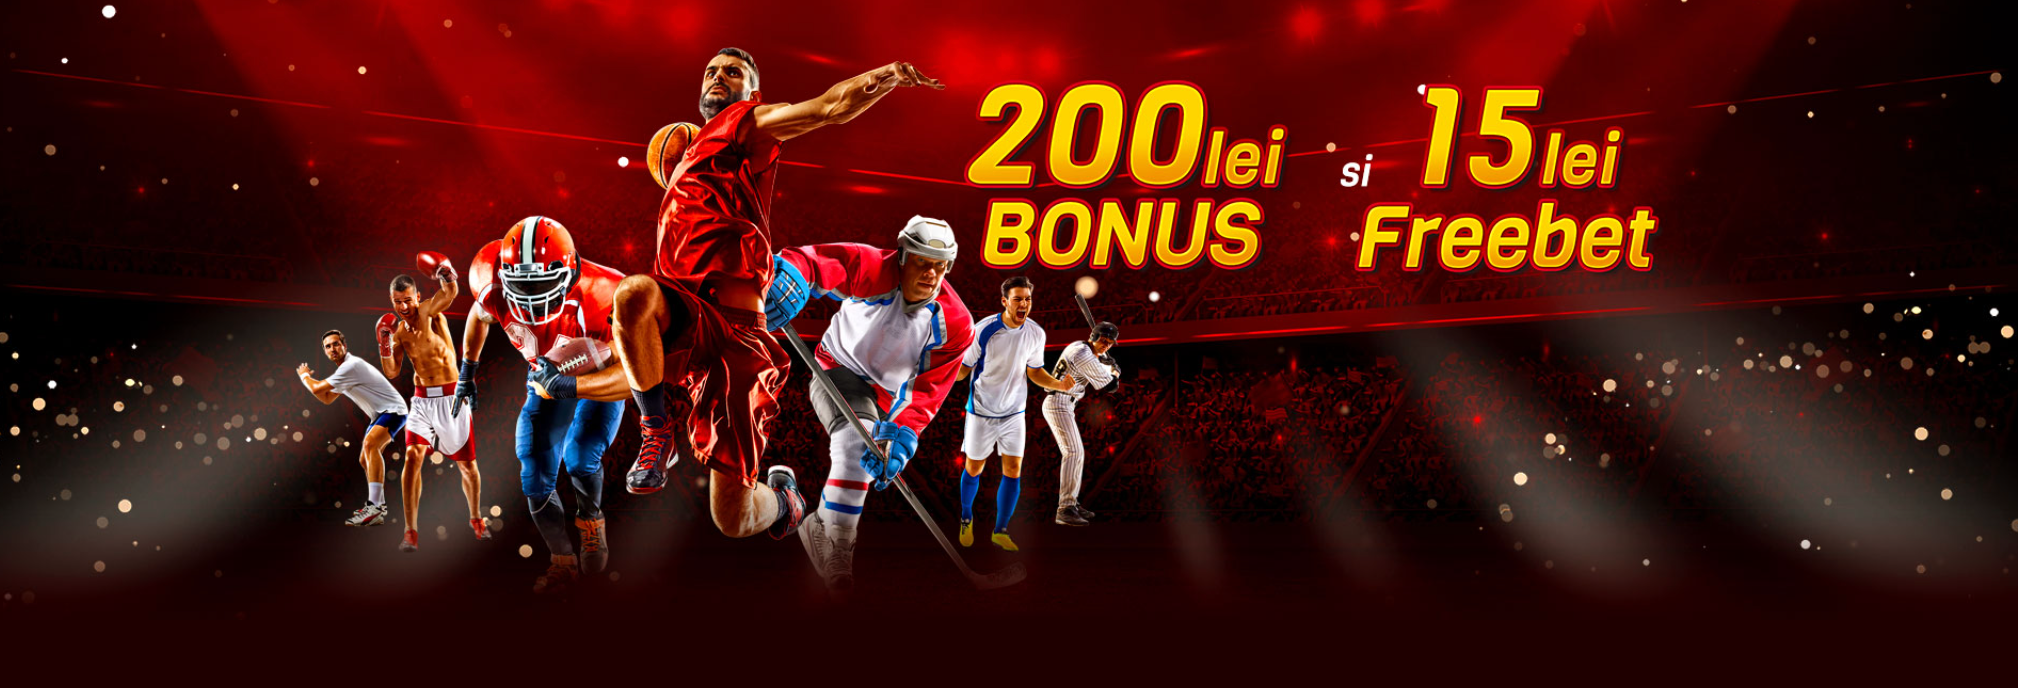 Elite Slots Bonus Sport – 1000 RON + 100 RON Free Bet